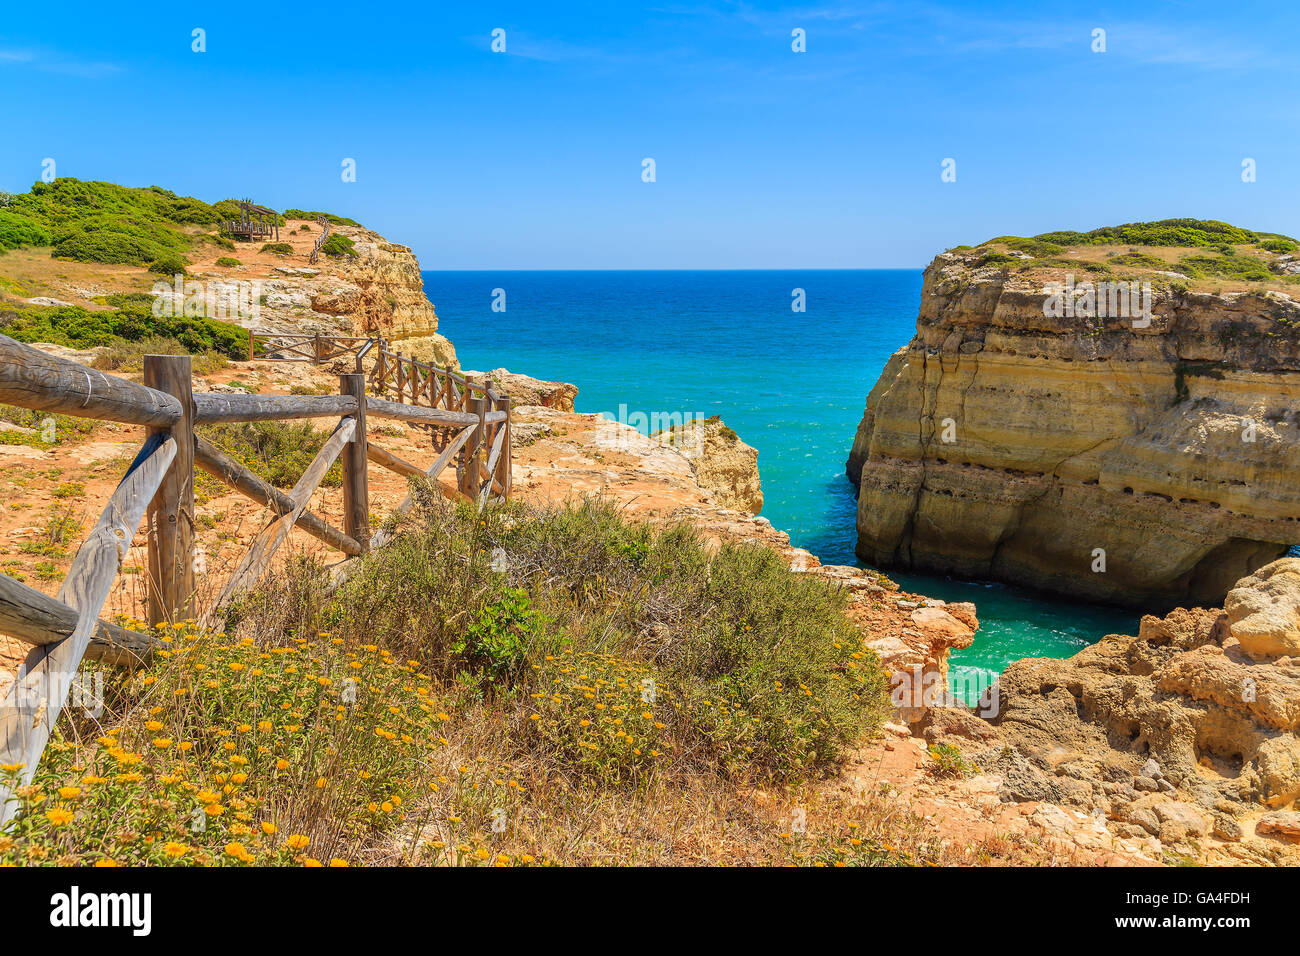 Blue sea and cliff path on coast of Portugal, Algarve region Stock Photo